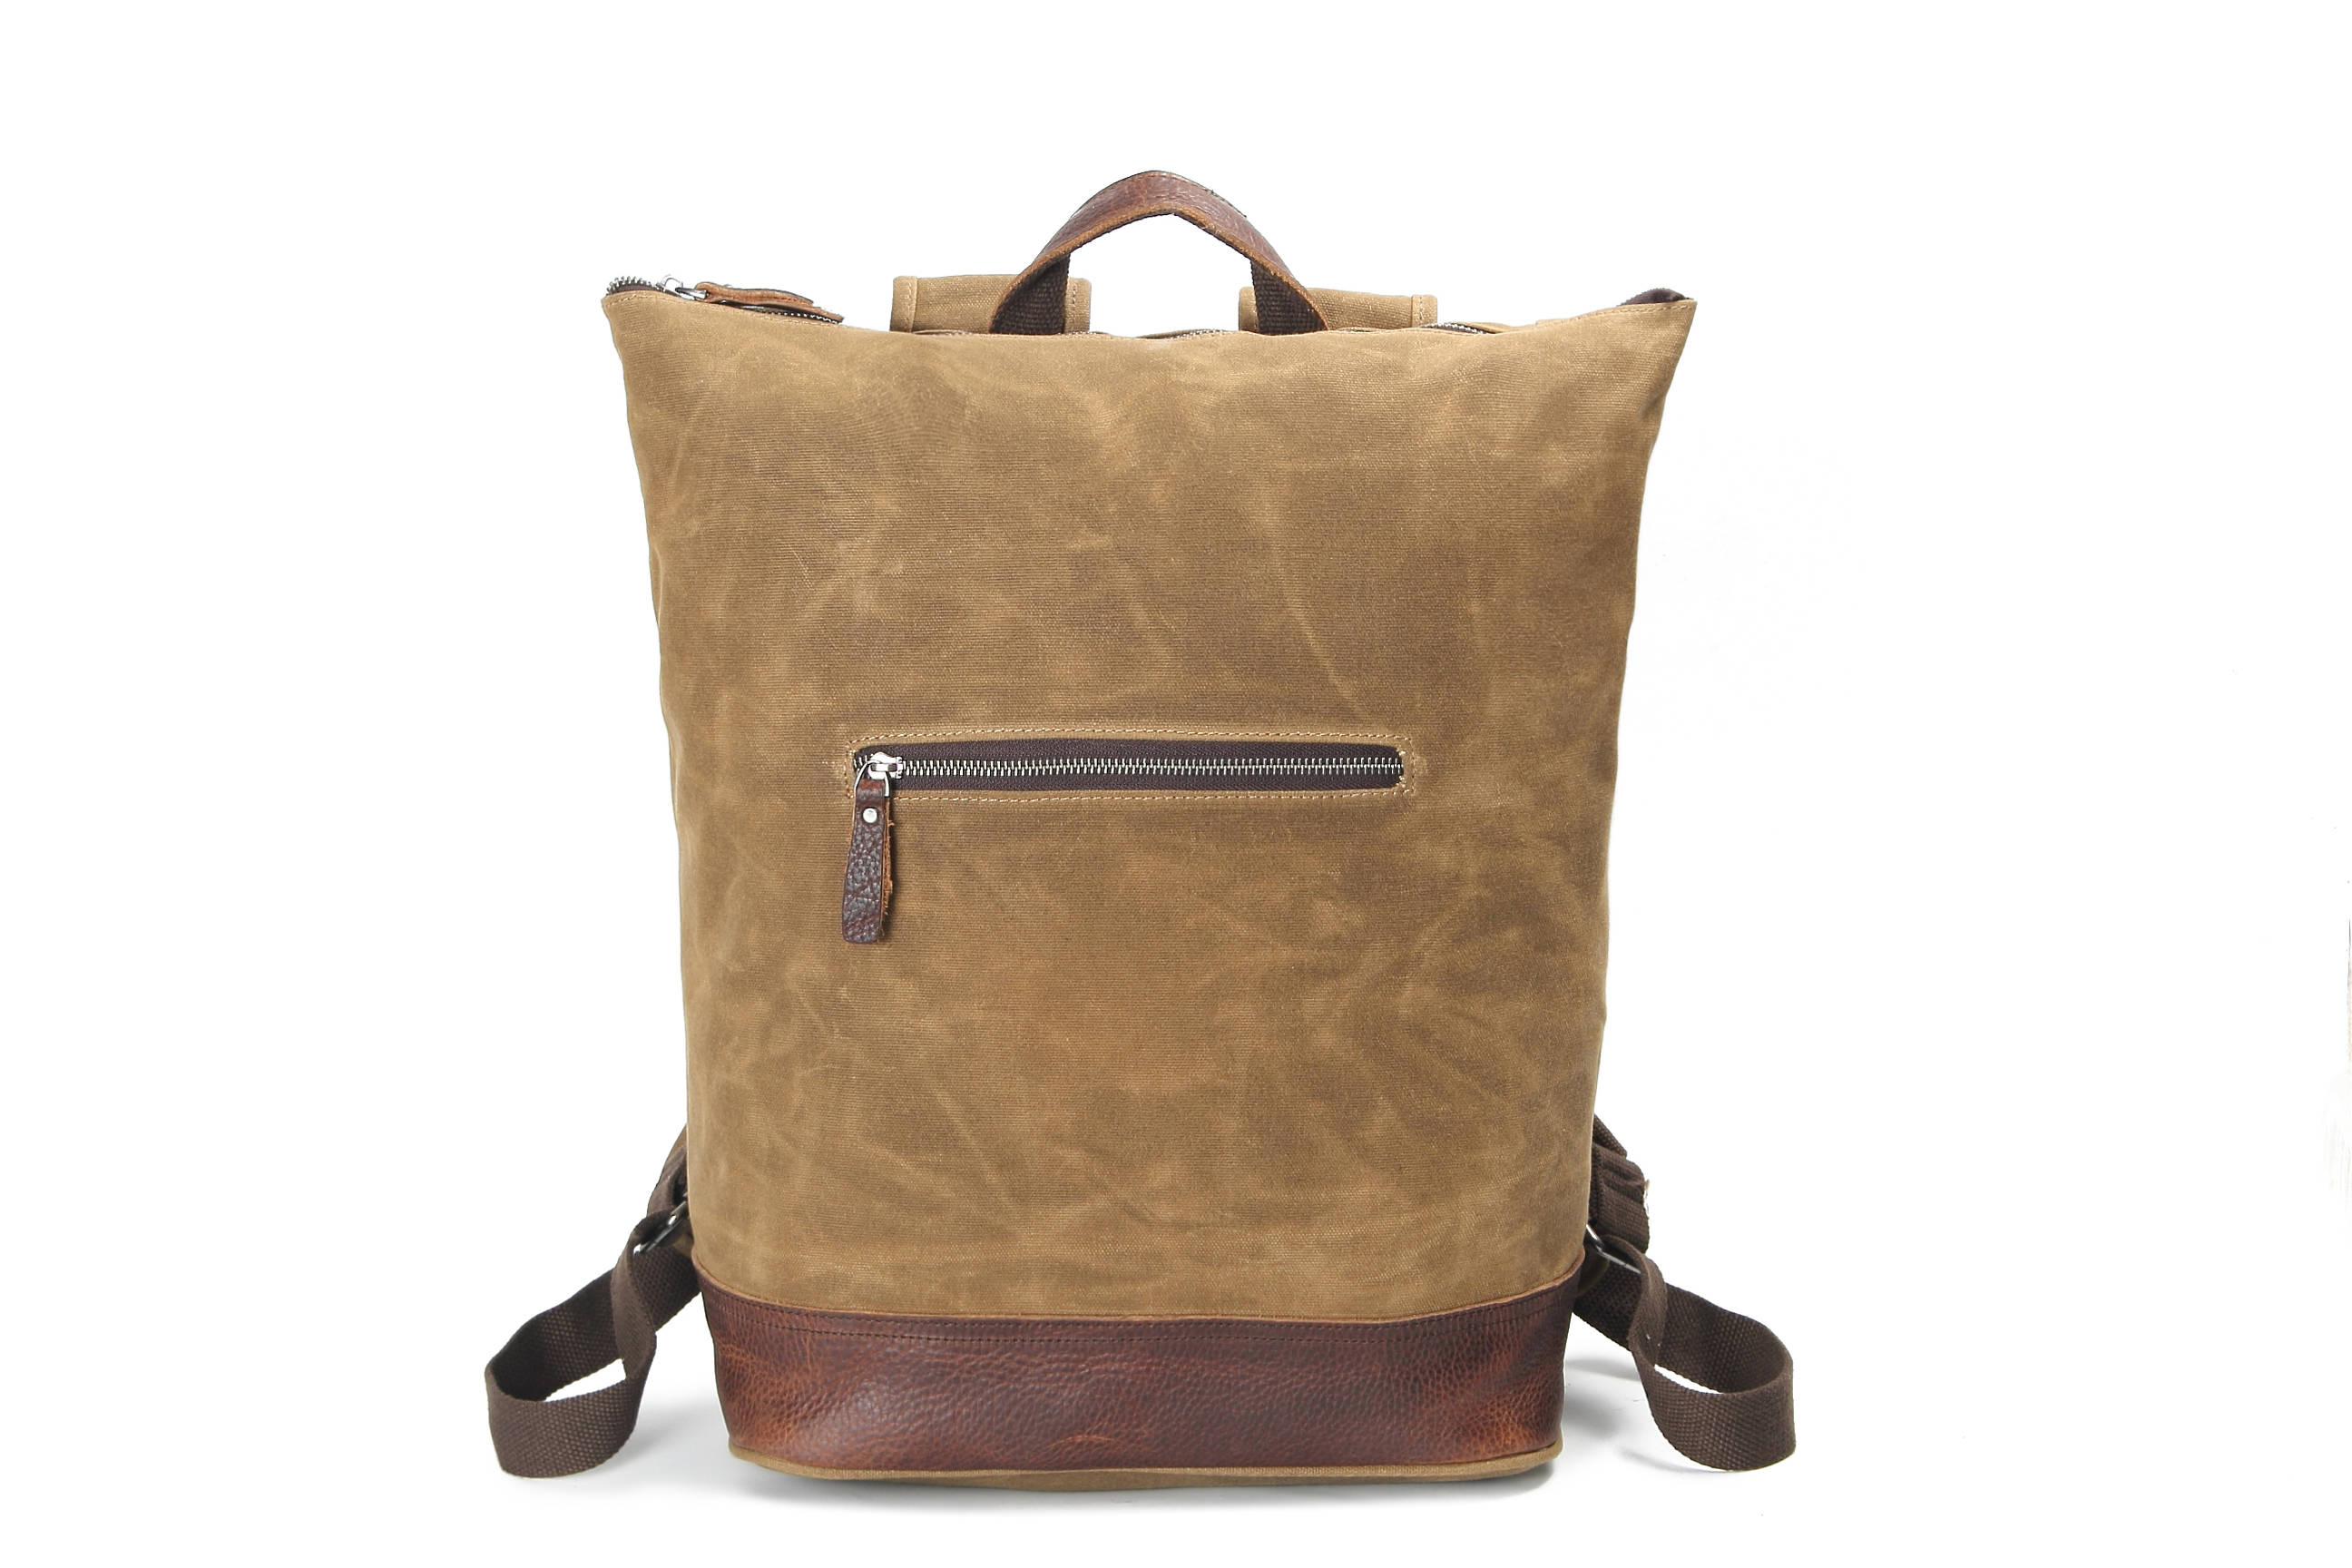 Top-Zipper vintage style leather canvas backpack Khaki | Etsy